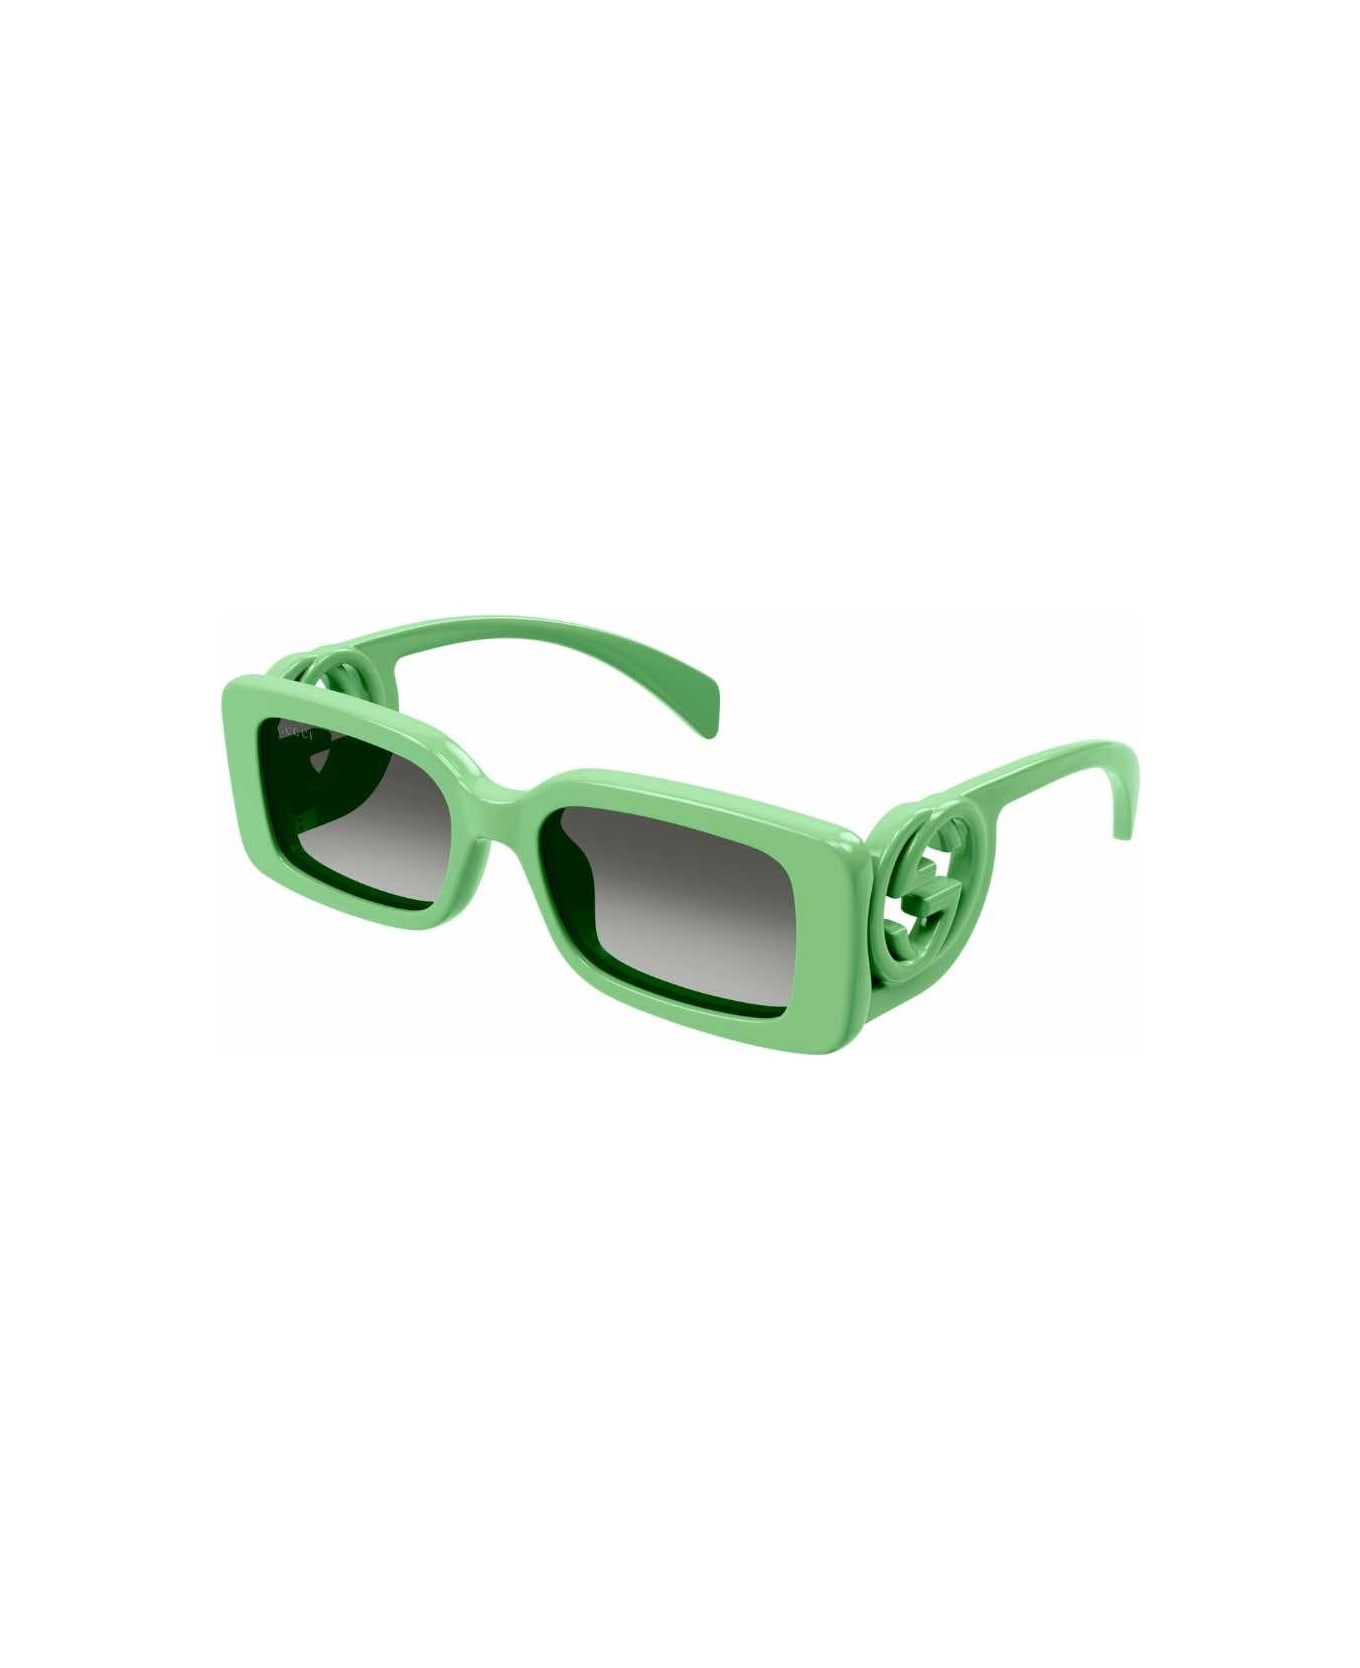 Gucci Eyewear Sunglasses - Verde/Grigio